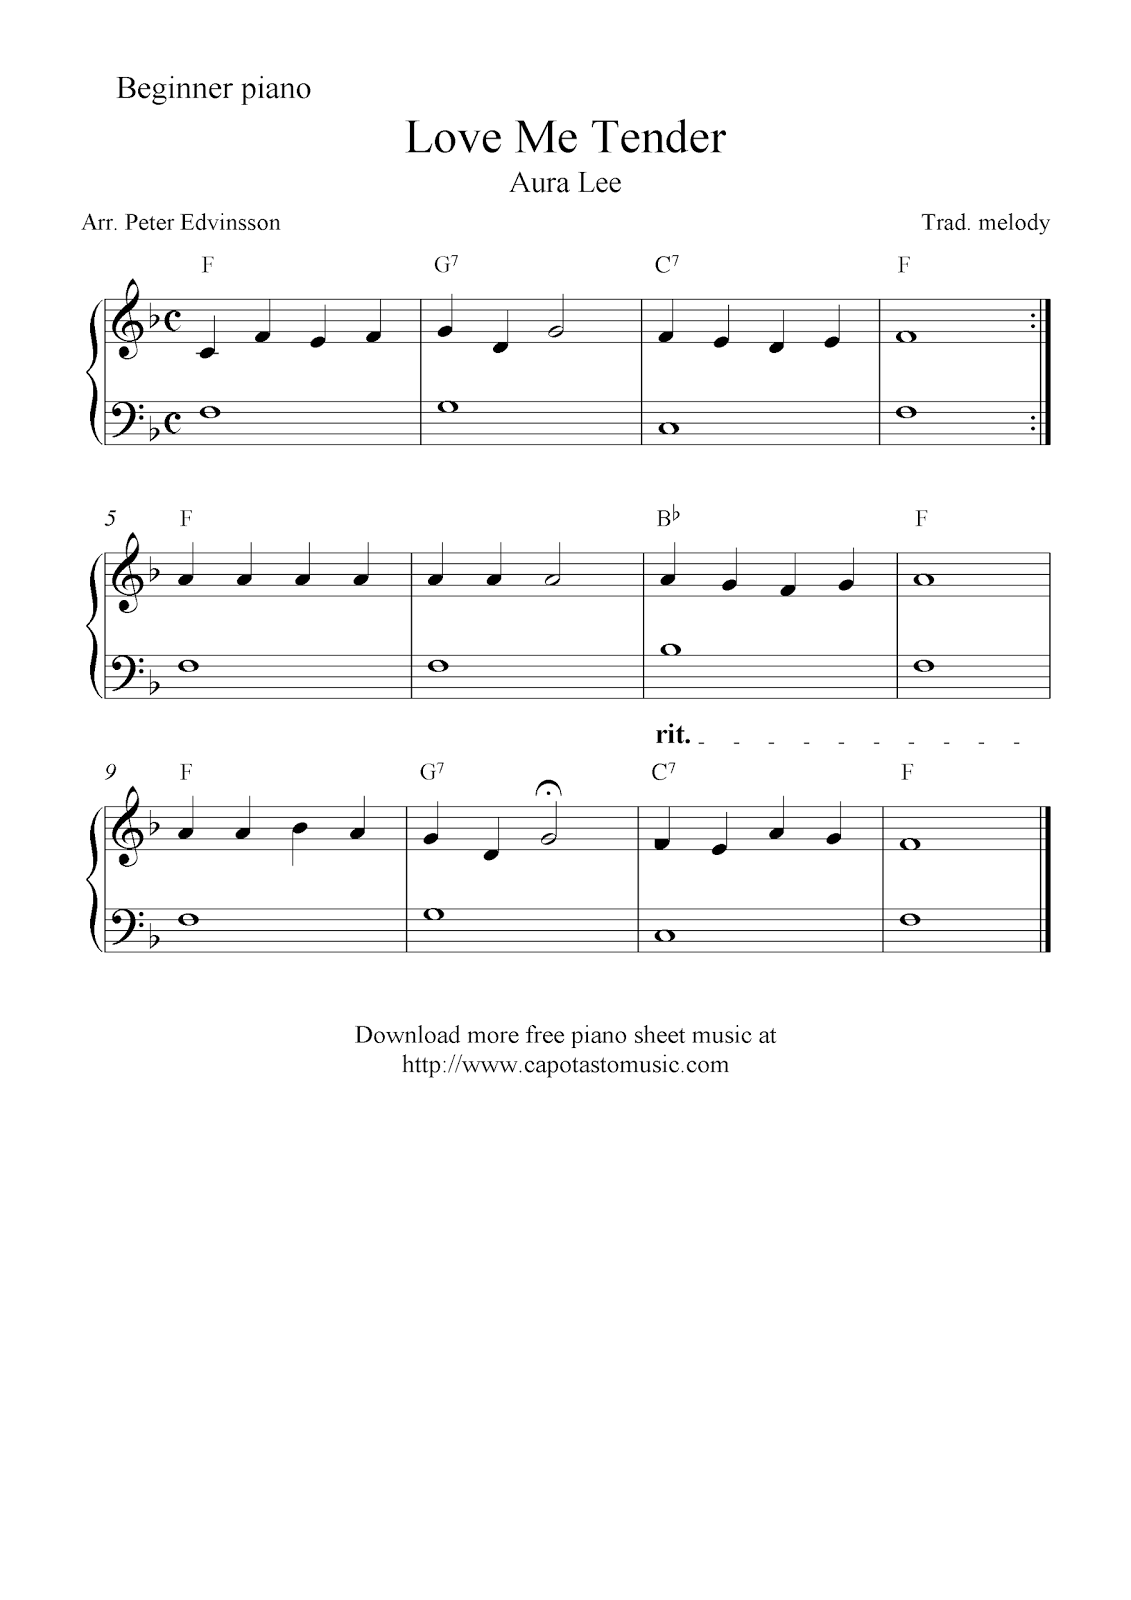 Free easy piano sheet music for beginners, Love Me Tender (Aura Lee)